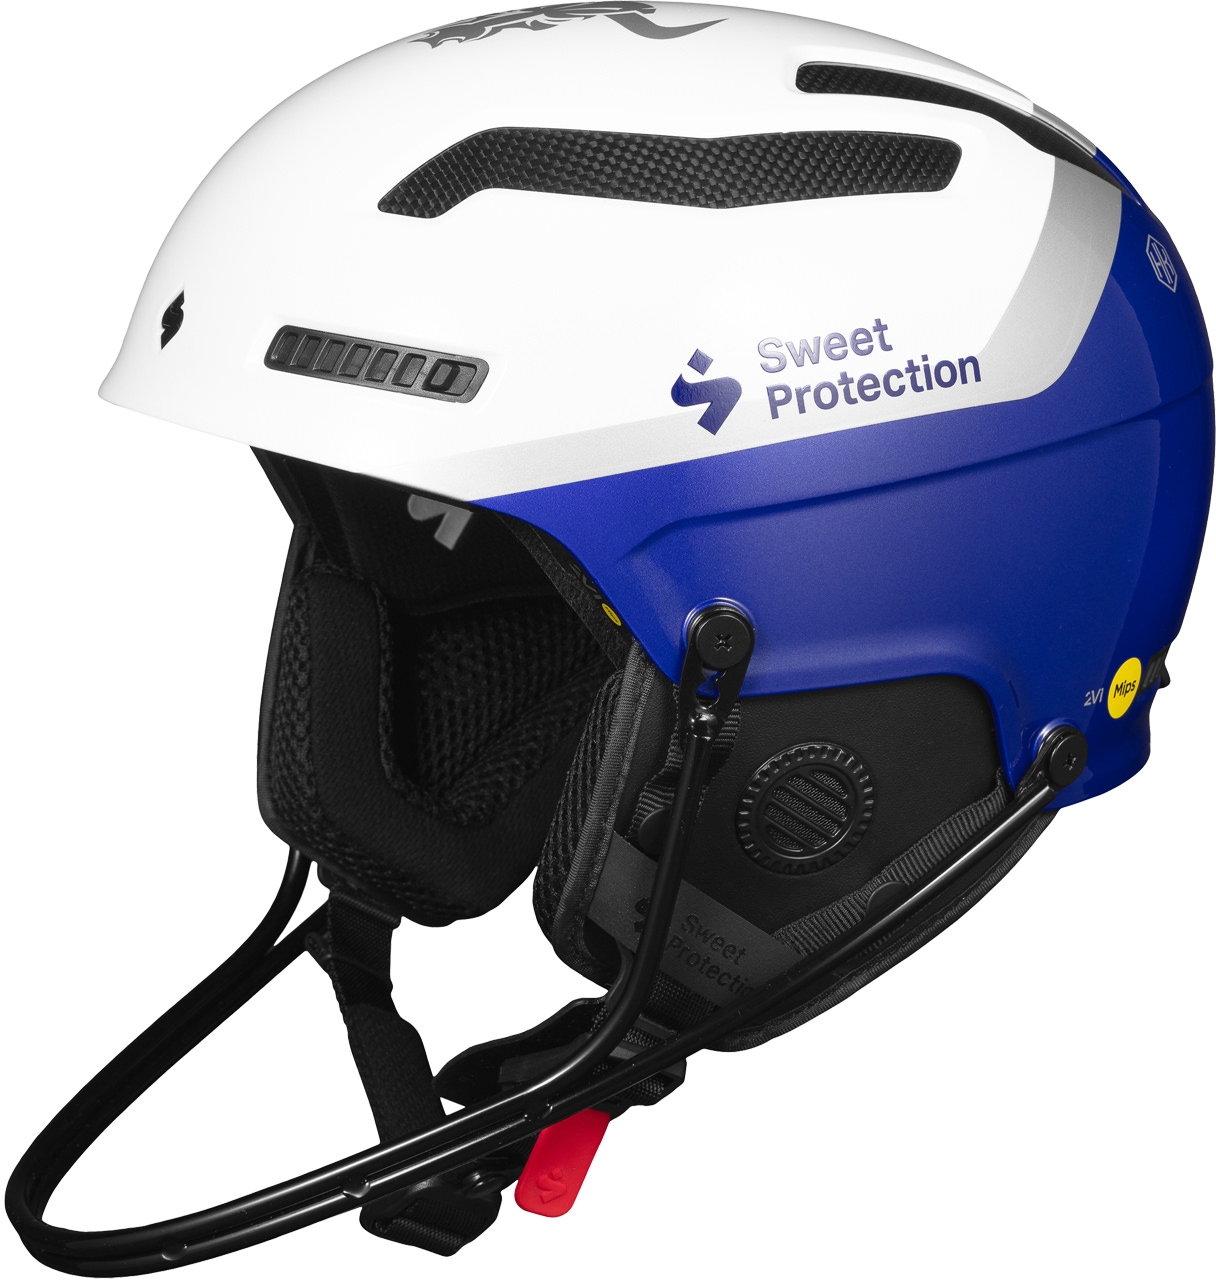 E-shop Sweet Protection Trooper 2Vi SL MIPS TE Helmet - Henrik Kristoffersen 56-59